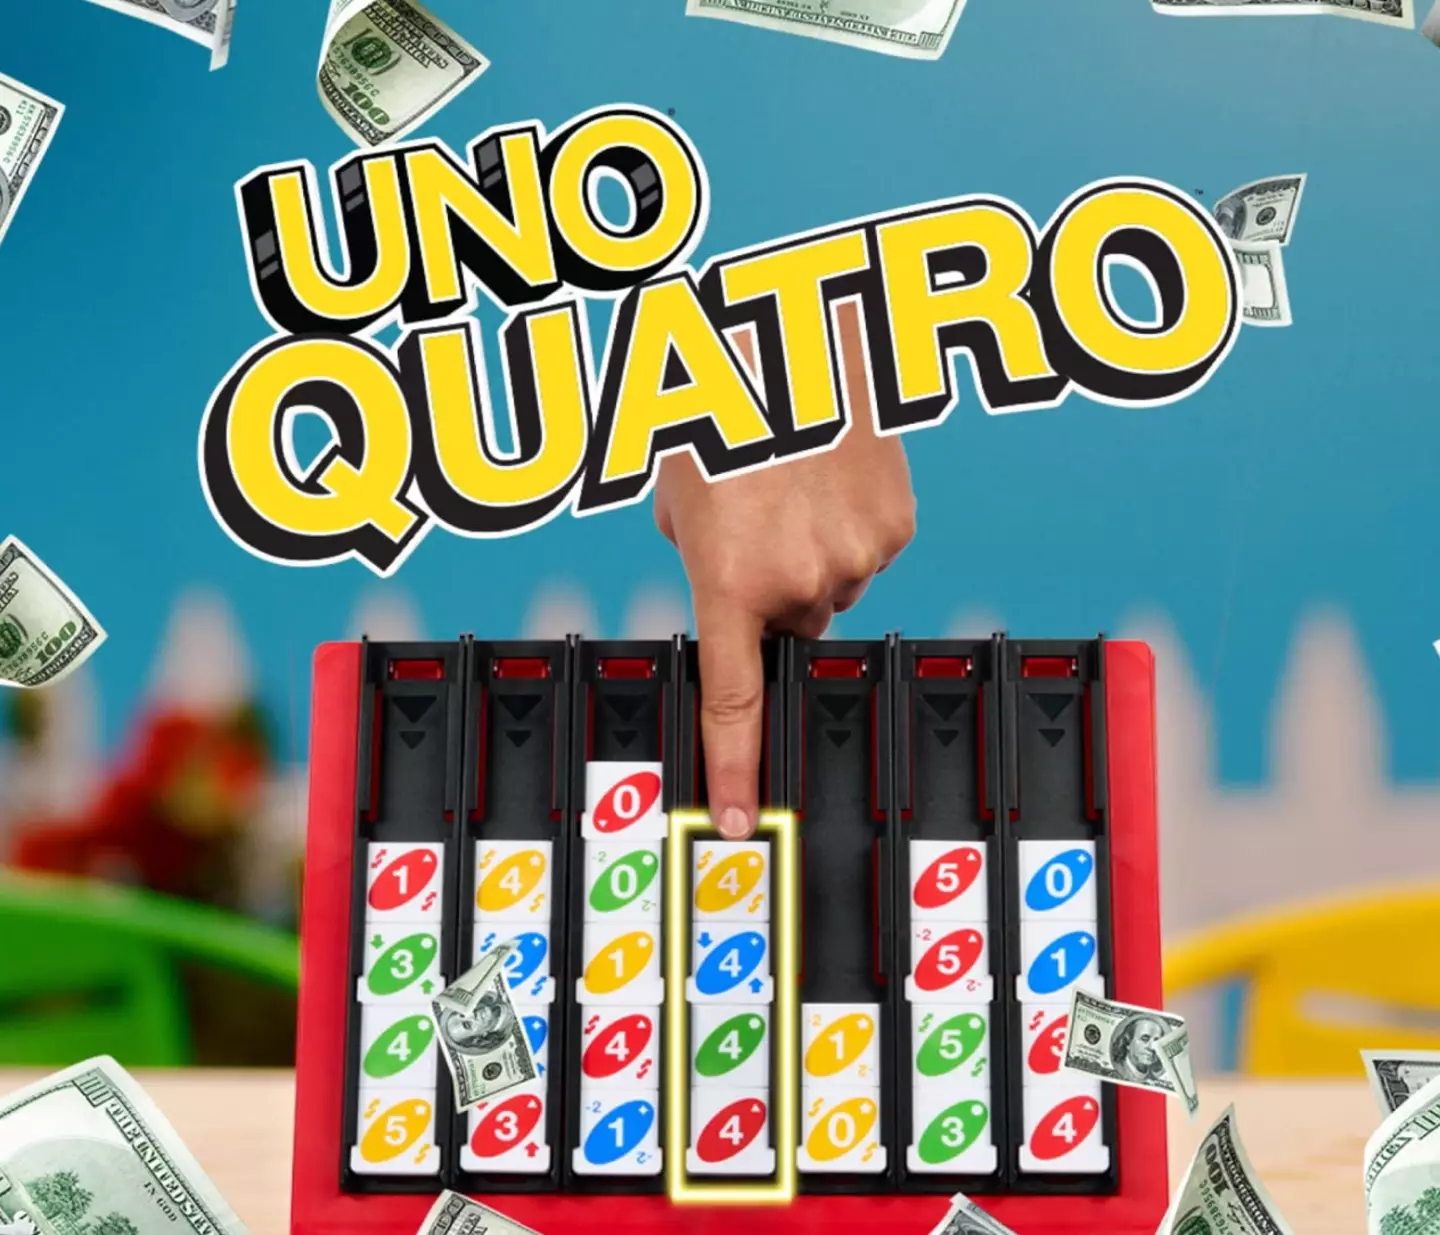 You'll be promoting UNO Quatro.